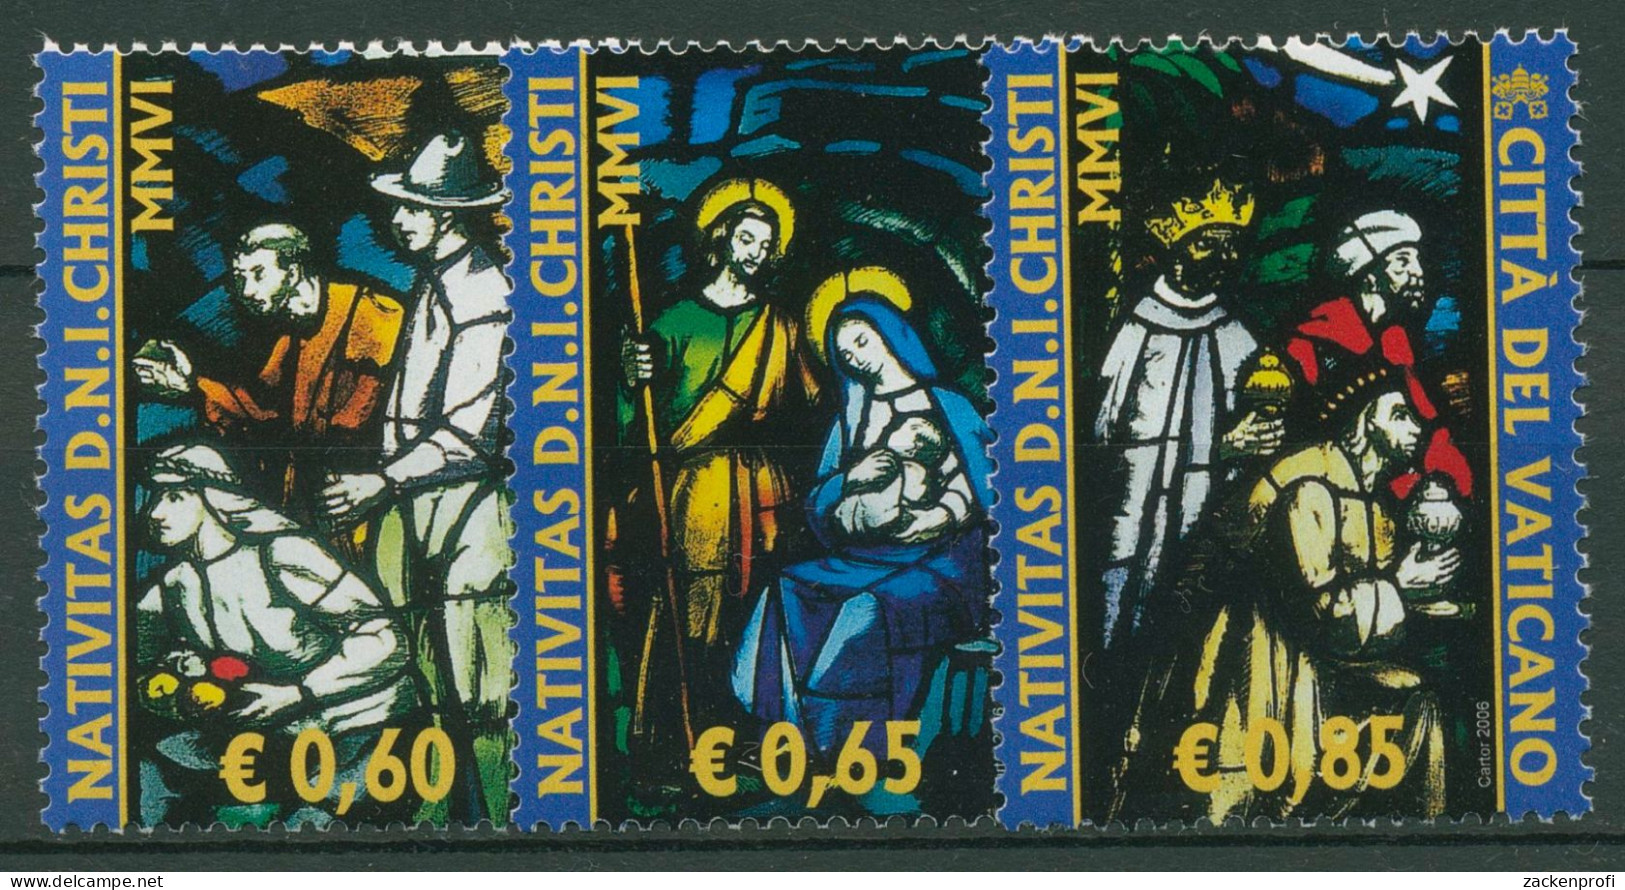 Vatikan 2006 Weihnachten Glasfenster 1566/68 Postfrisch - Ongebruikt